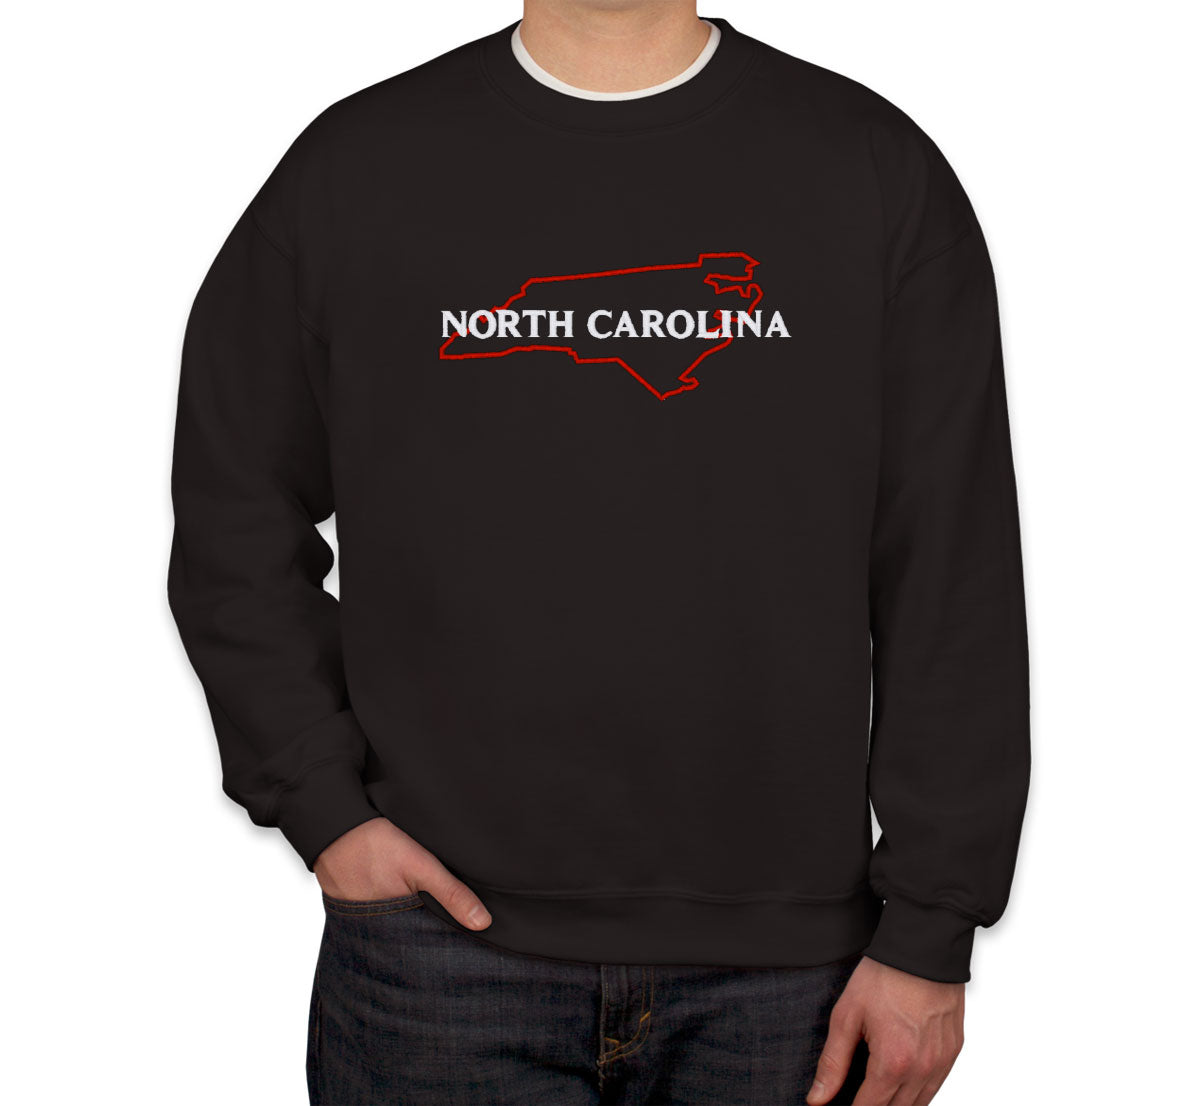 North Carolina Embroidered Unisex Sweatshirt